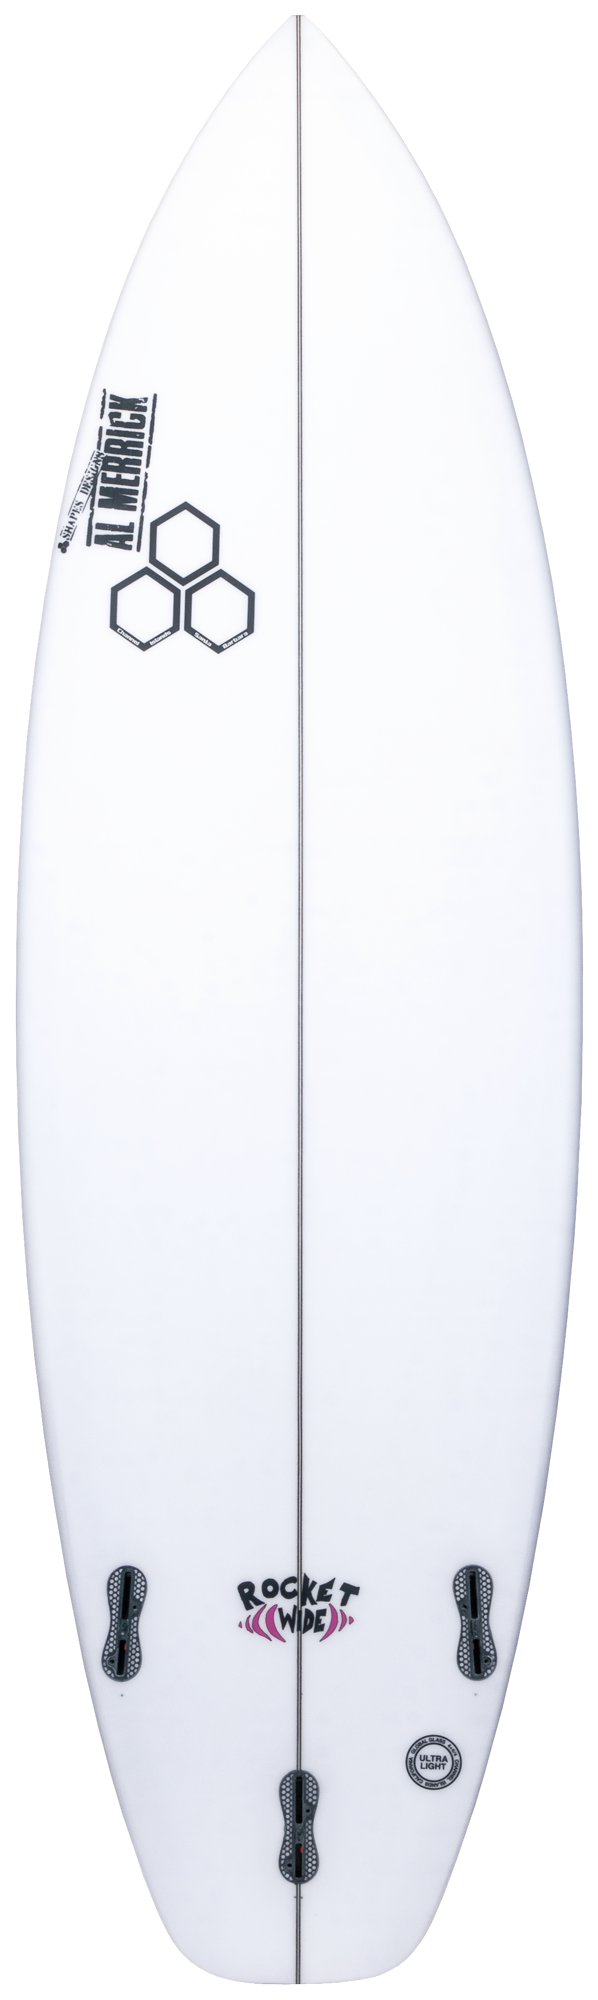 Rocket Wide Squash – Channel Islands Surfboards